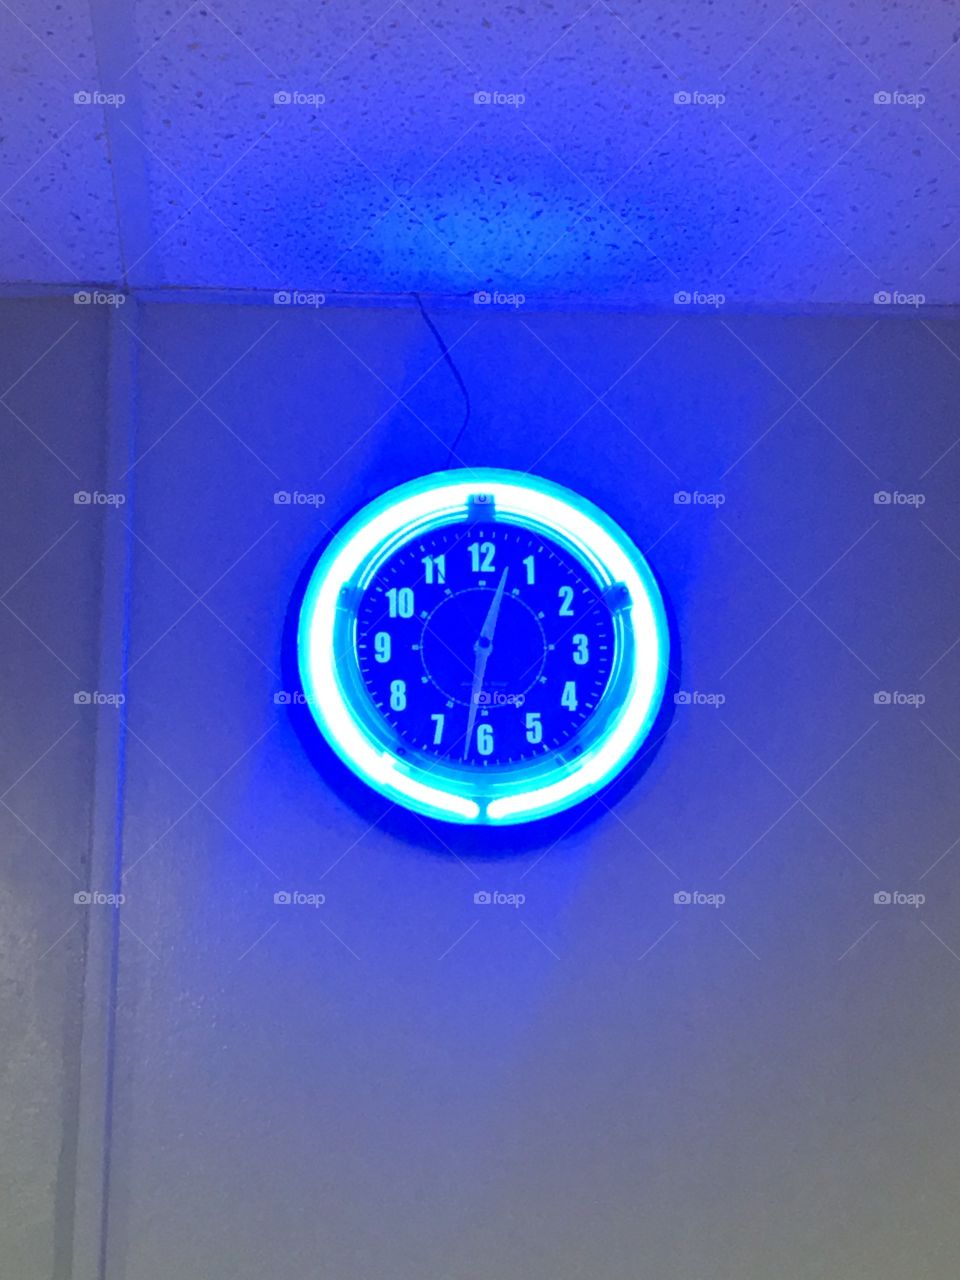 Tron clock neon blue